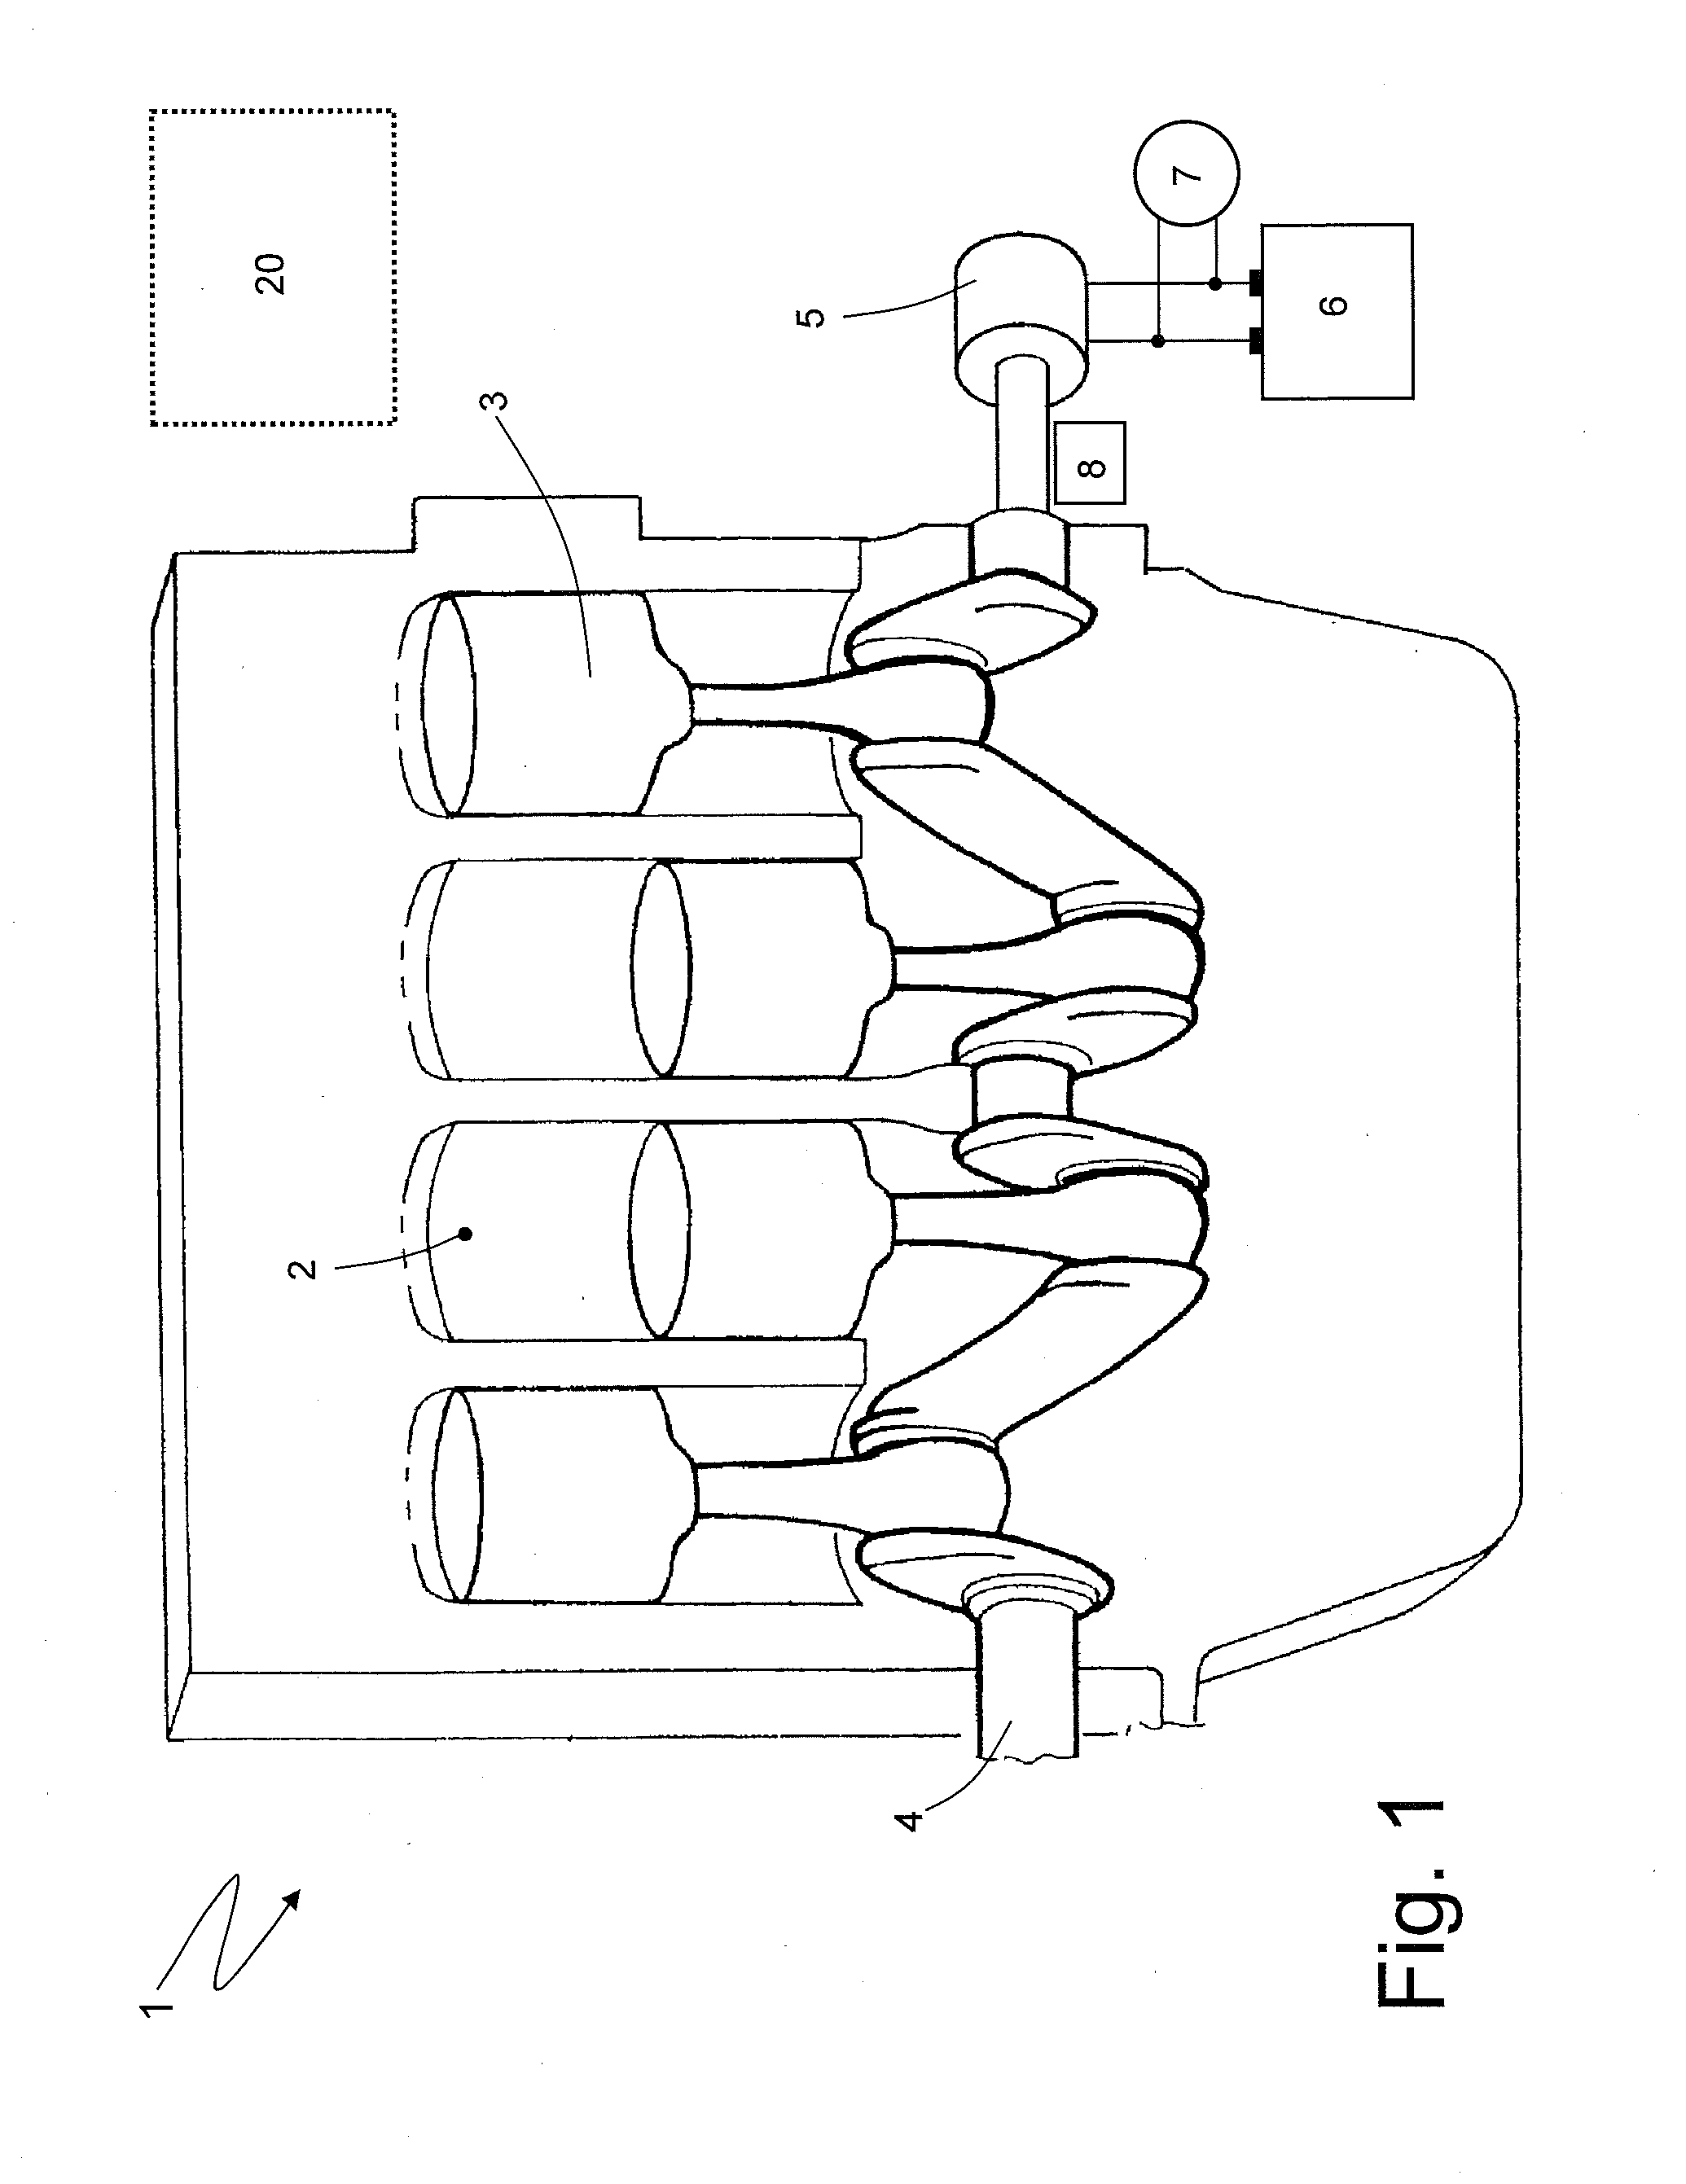 Method of determining opening of an internal combustion engine intake valve